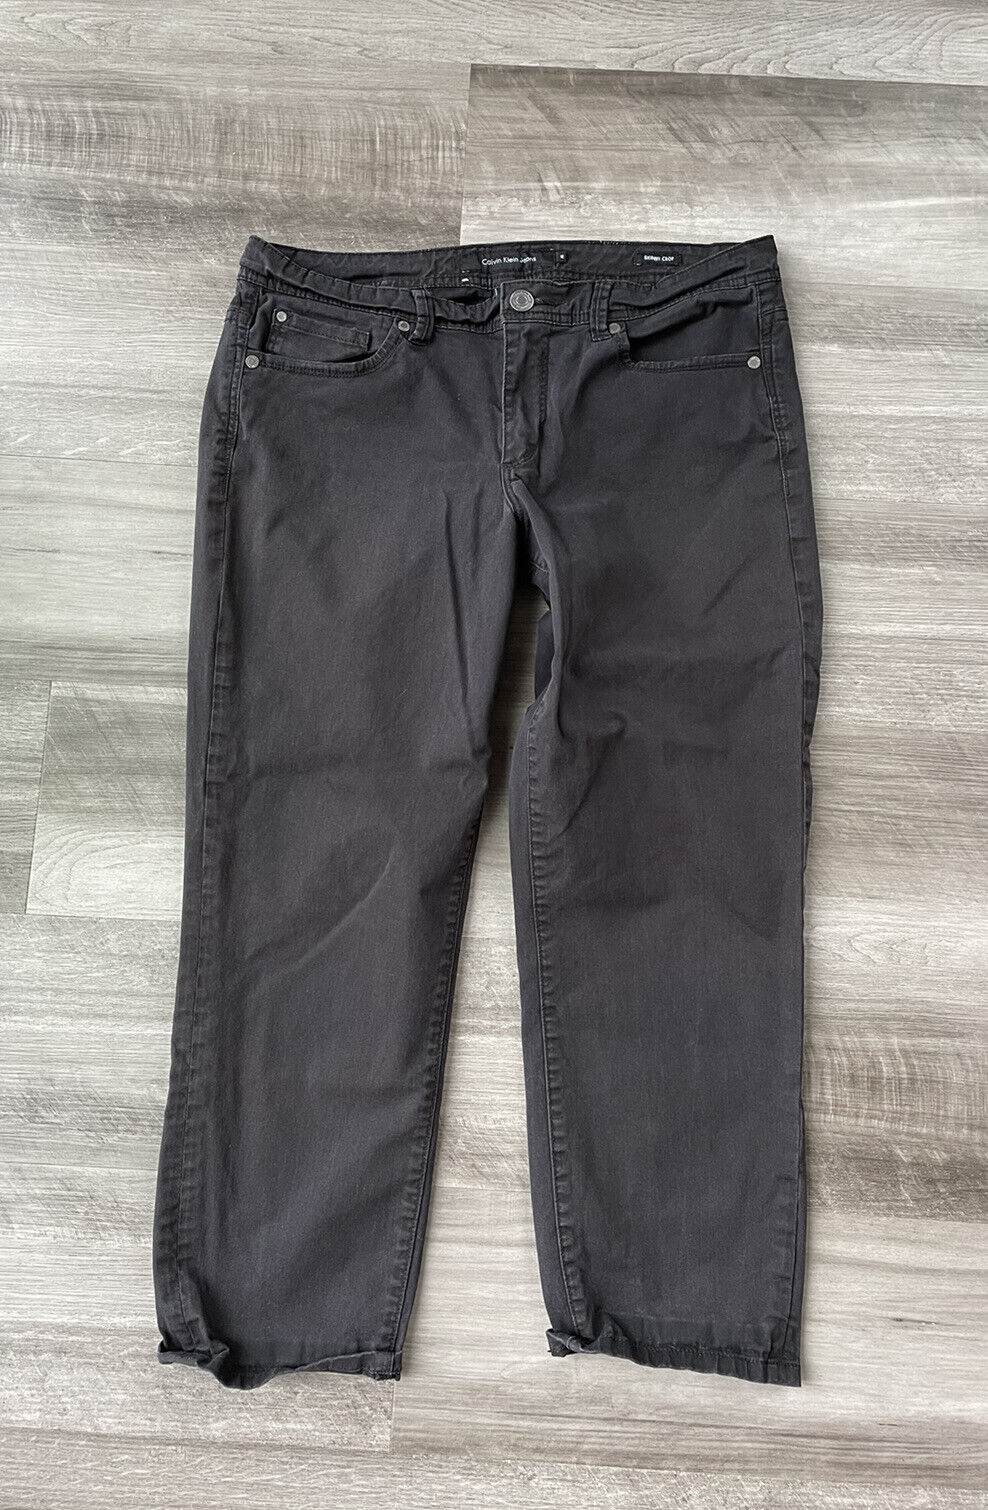 Calvin Klein Black Skinny Crop Jeans size 12 Stretch L7 | eBay